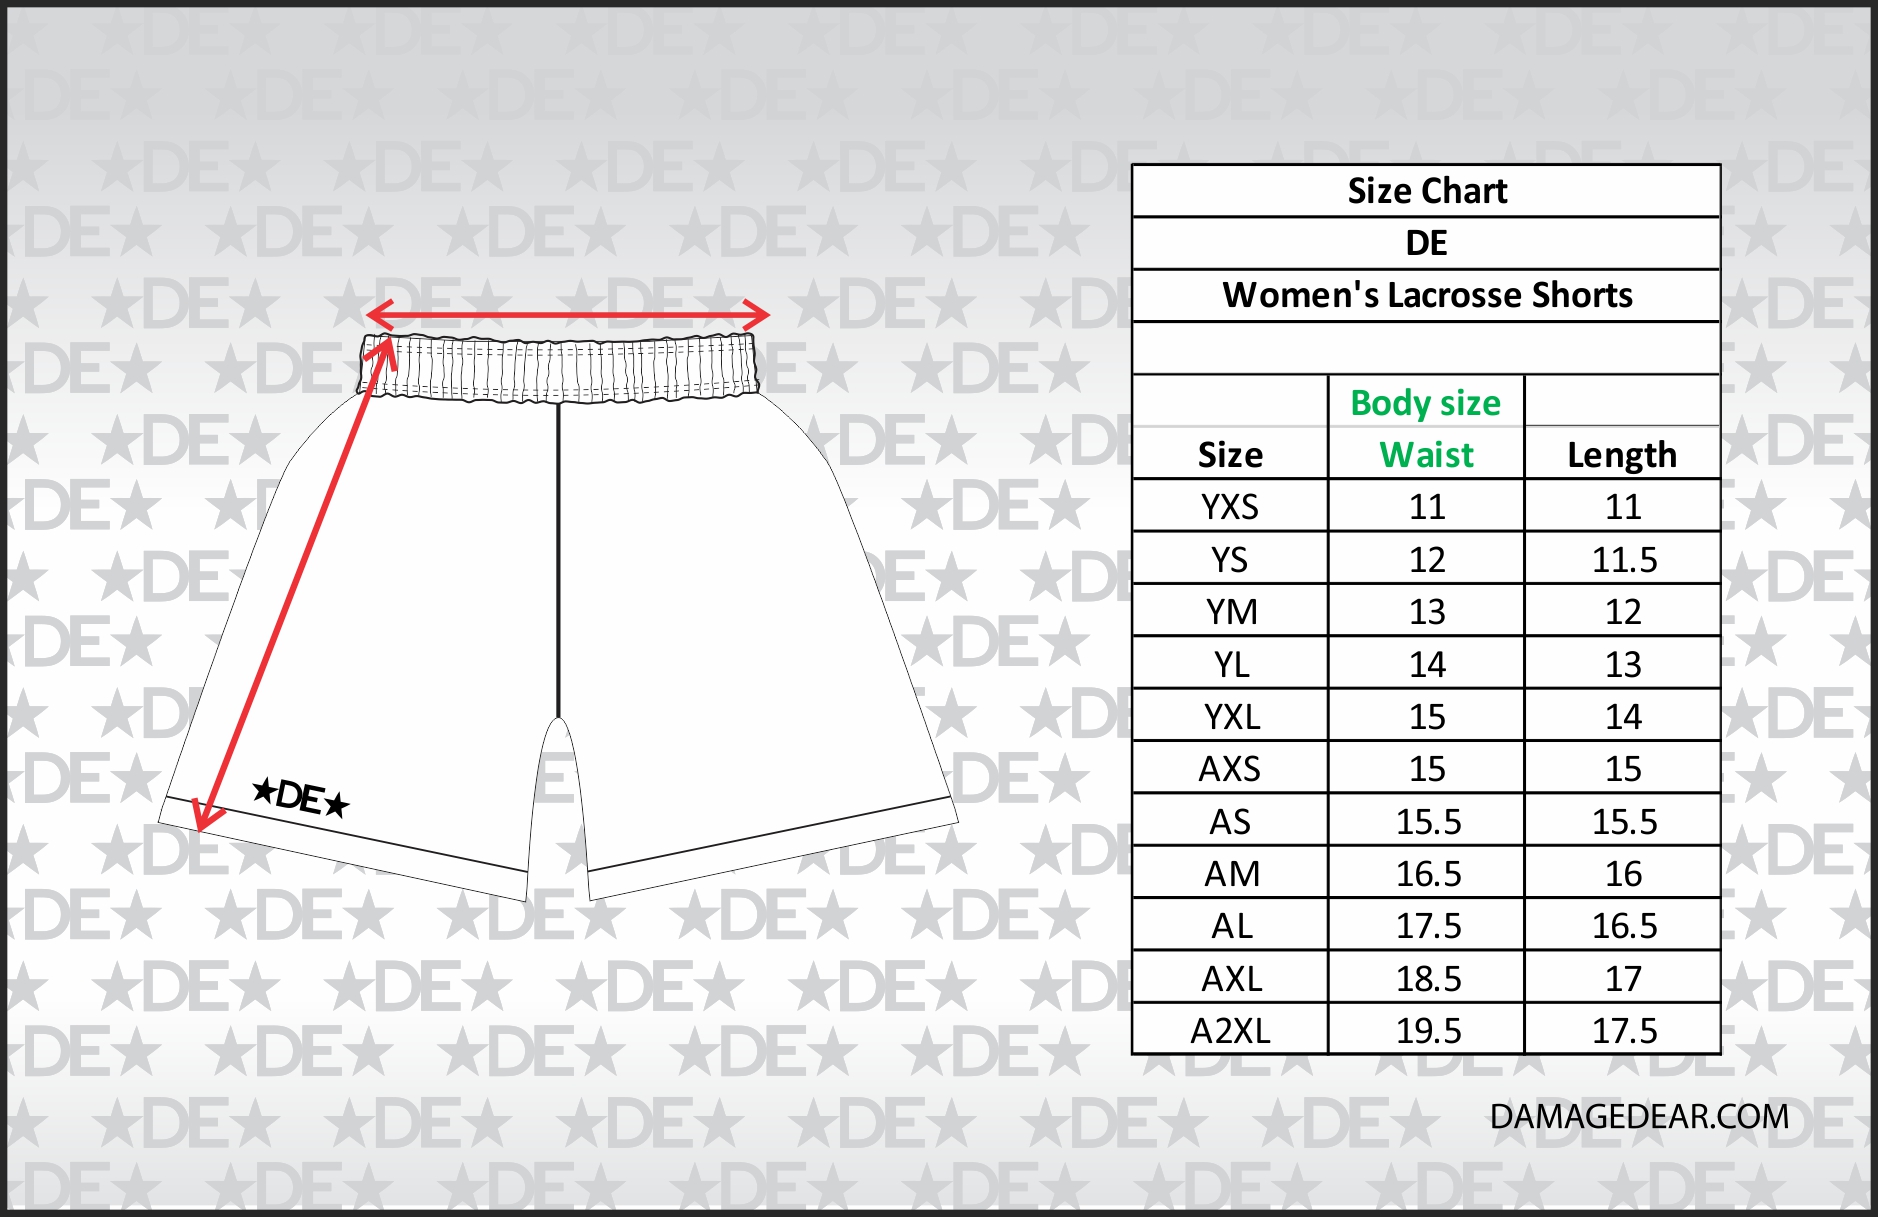 Women's Lacrosse Shorts Size Chart